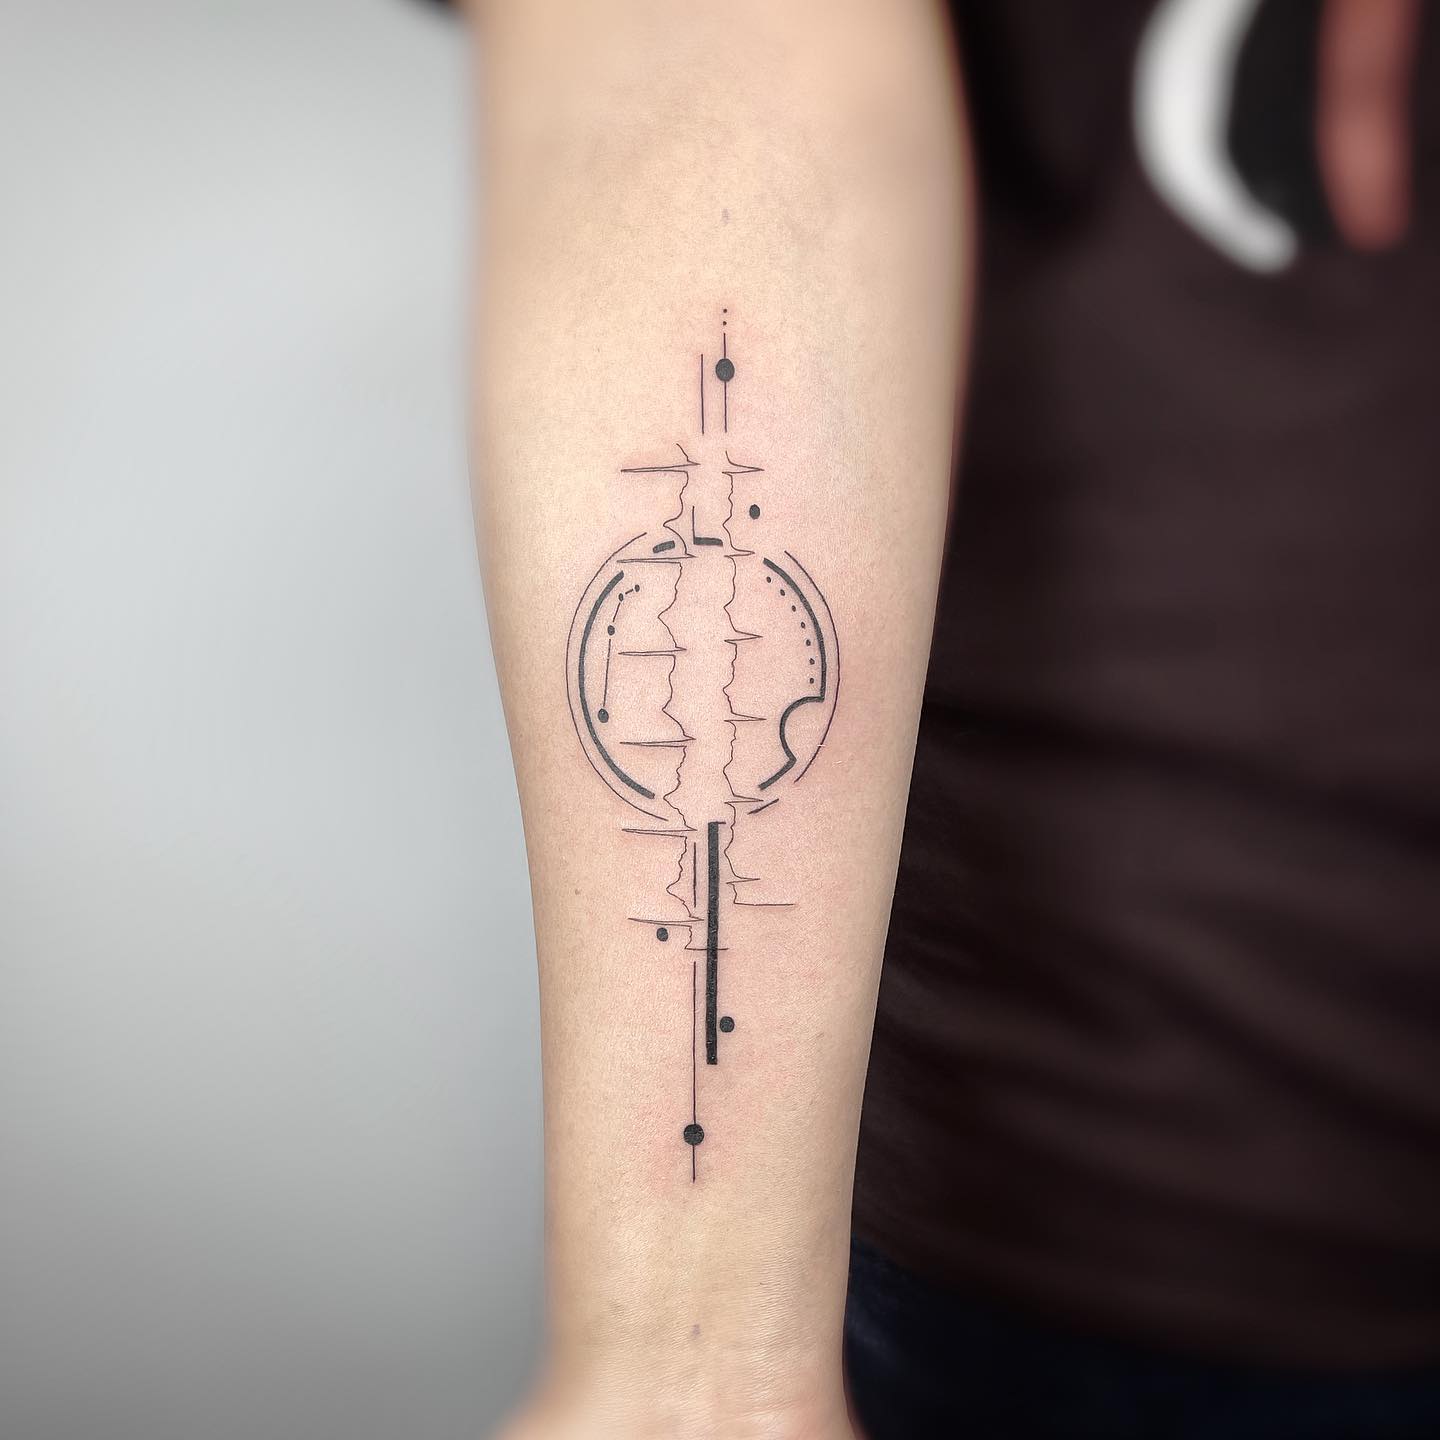 Tatuaje geométrico conmemorativo.